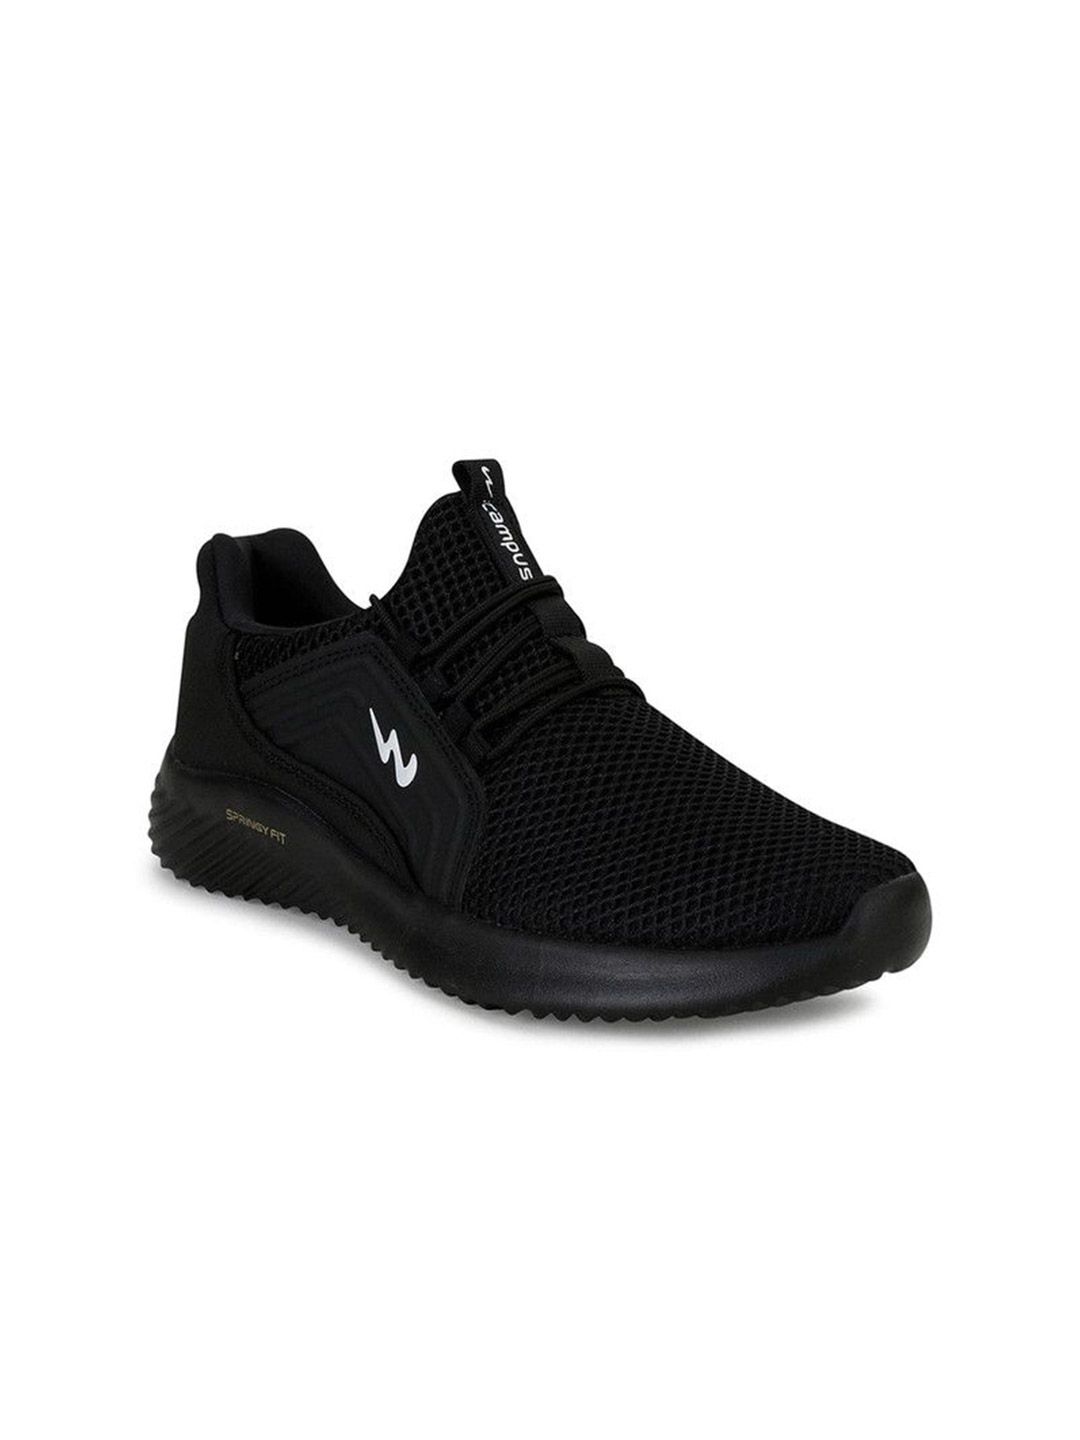 Buy Men Tyson Pro Black Running Shoes From Fancode Shop.